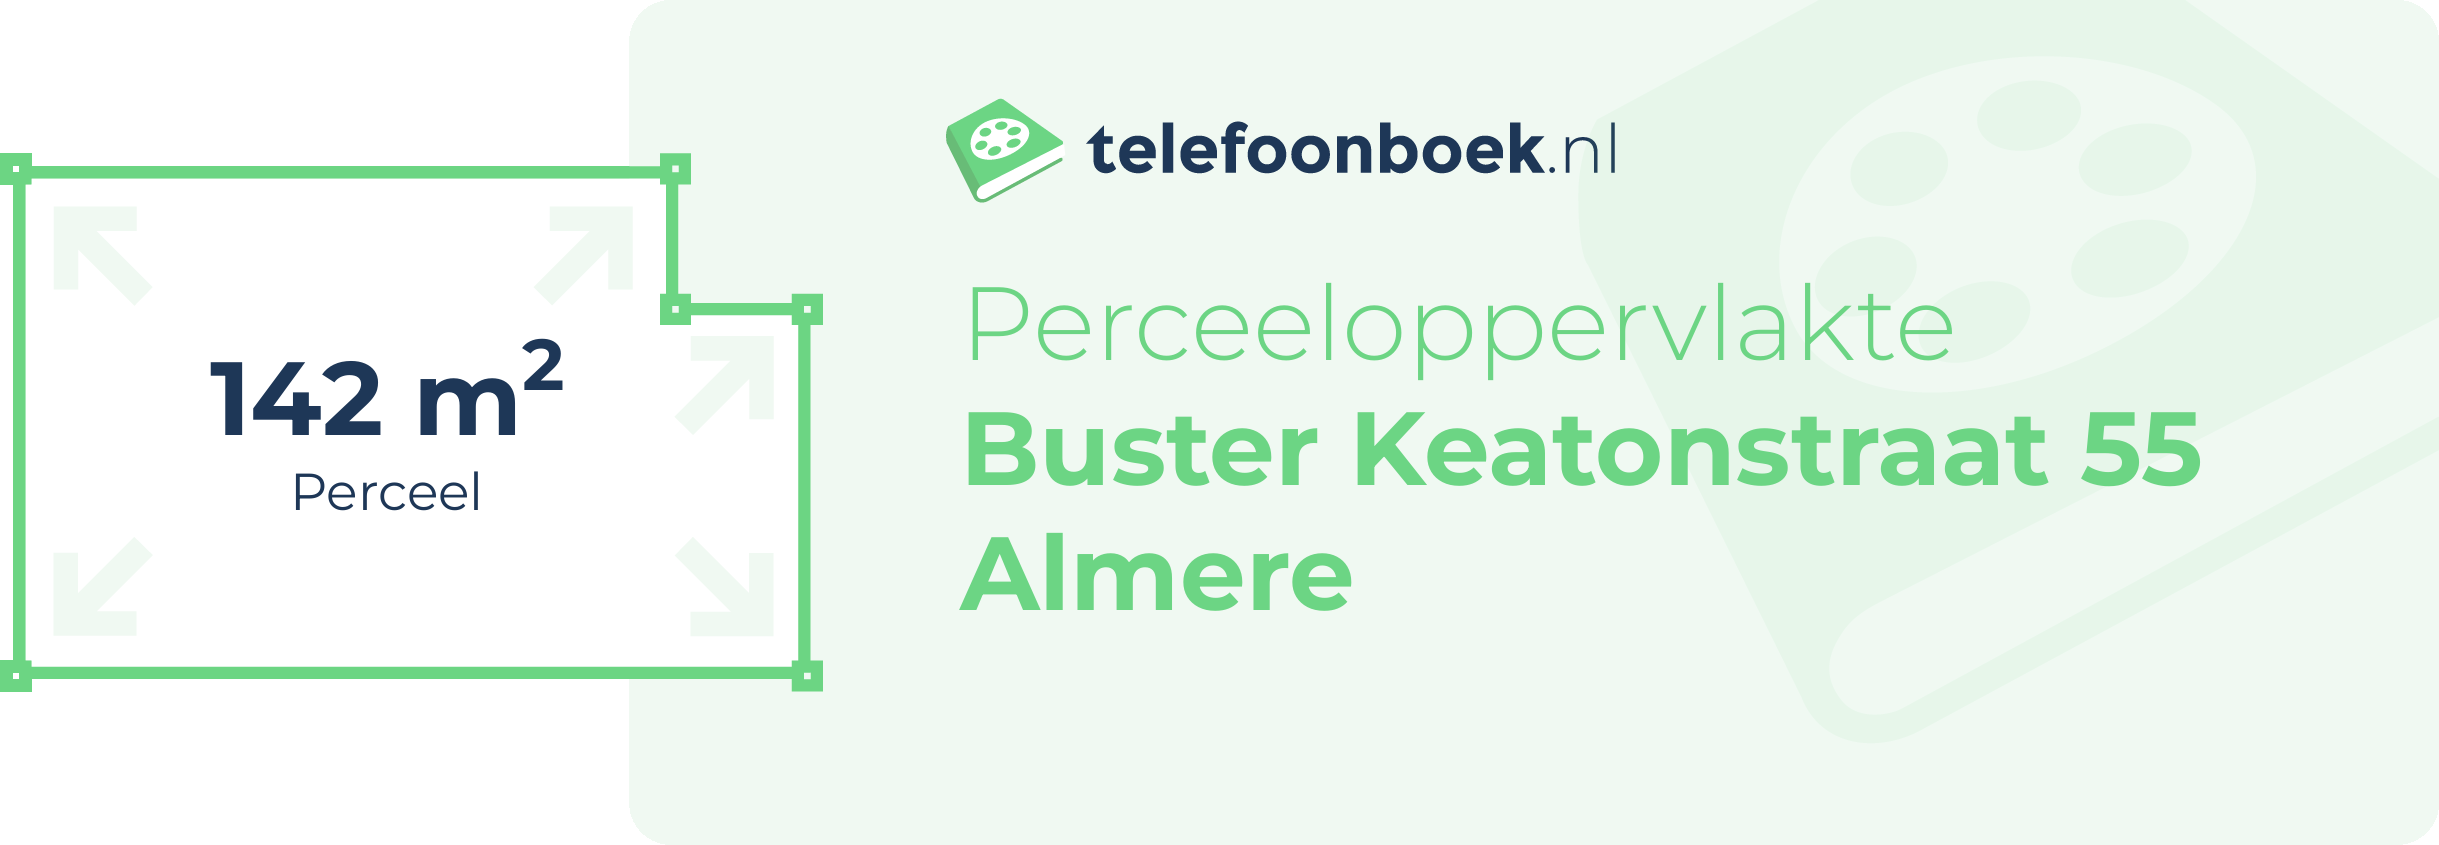 Perceeloppervlakte Buster Keatonstraat 55 Almere